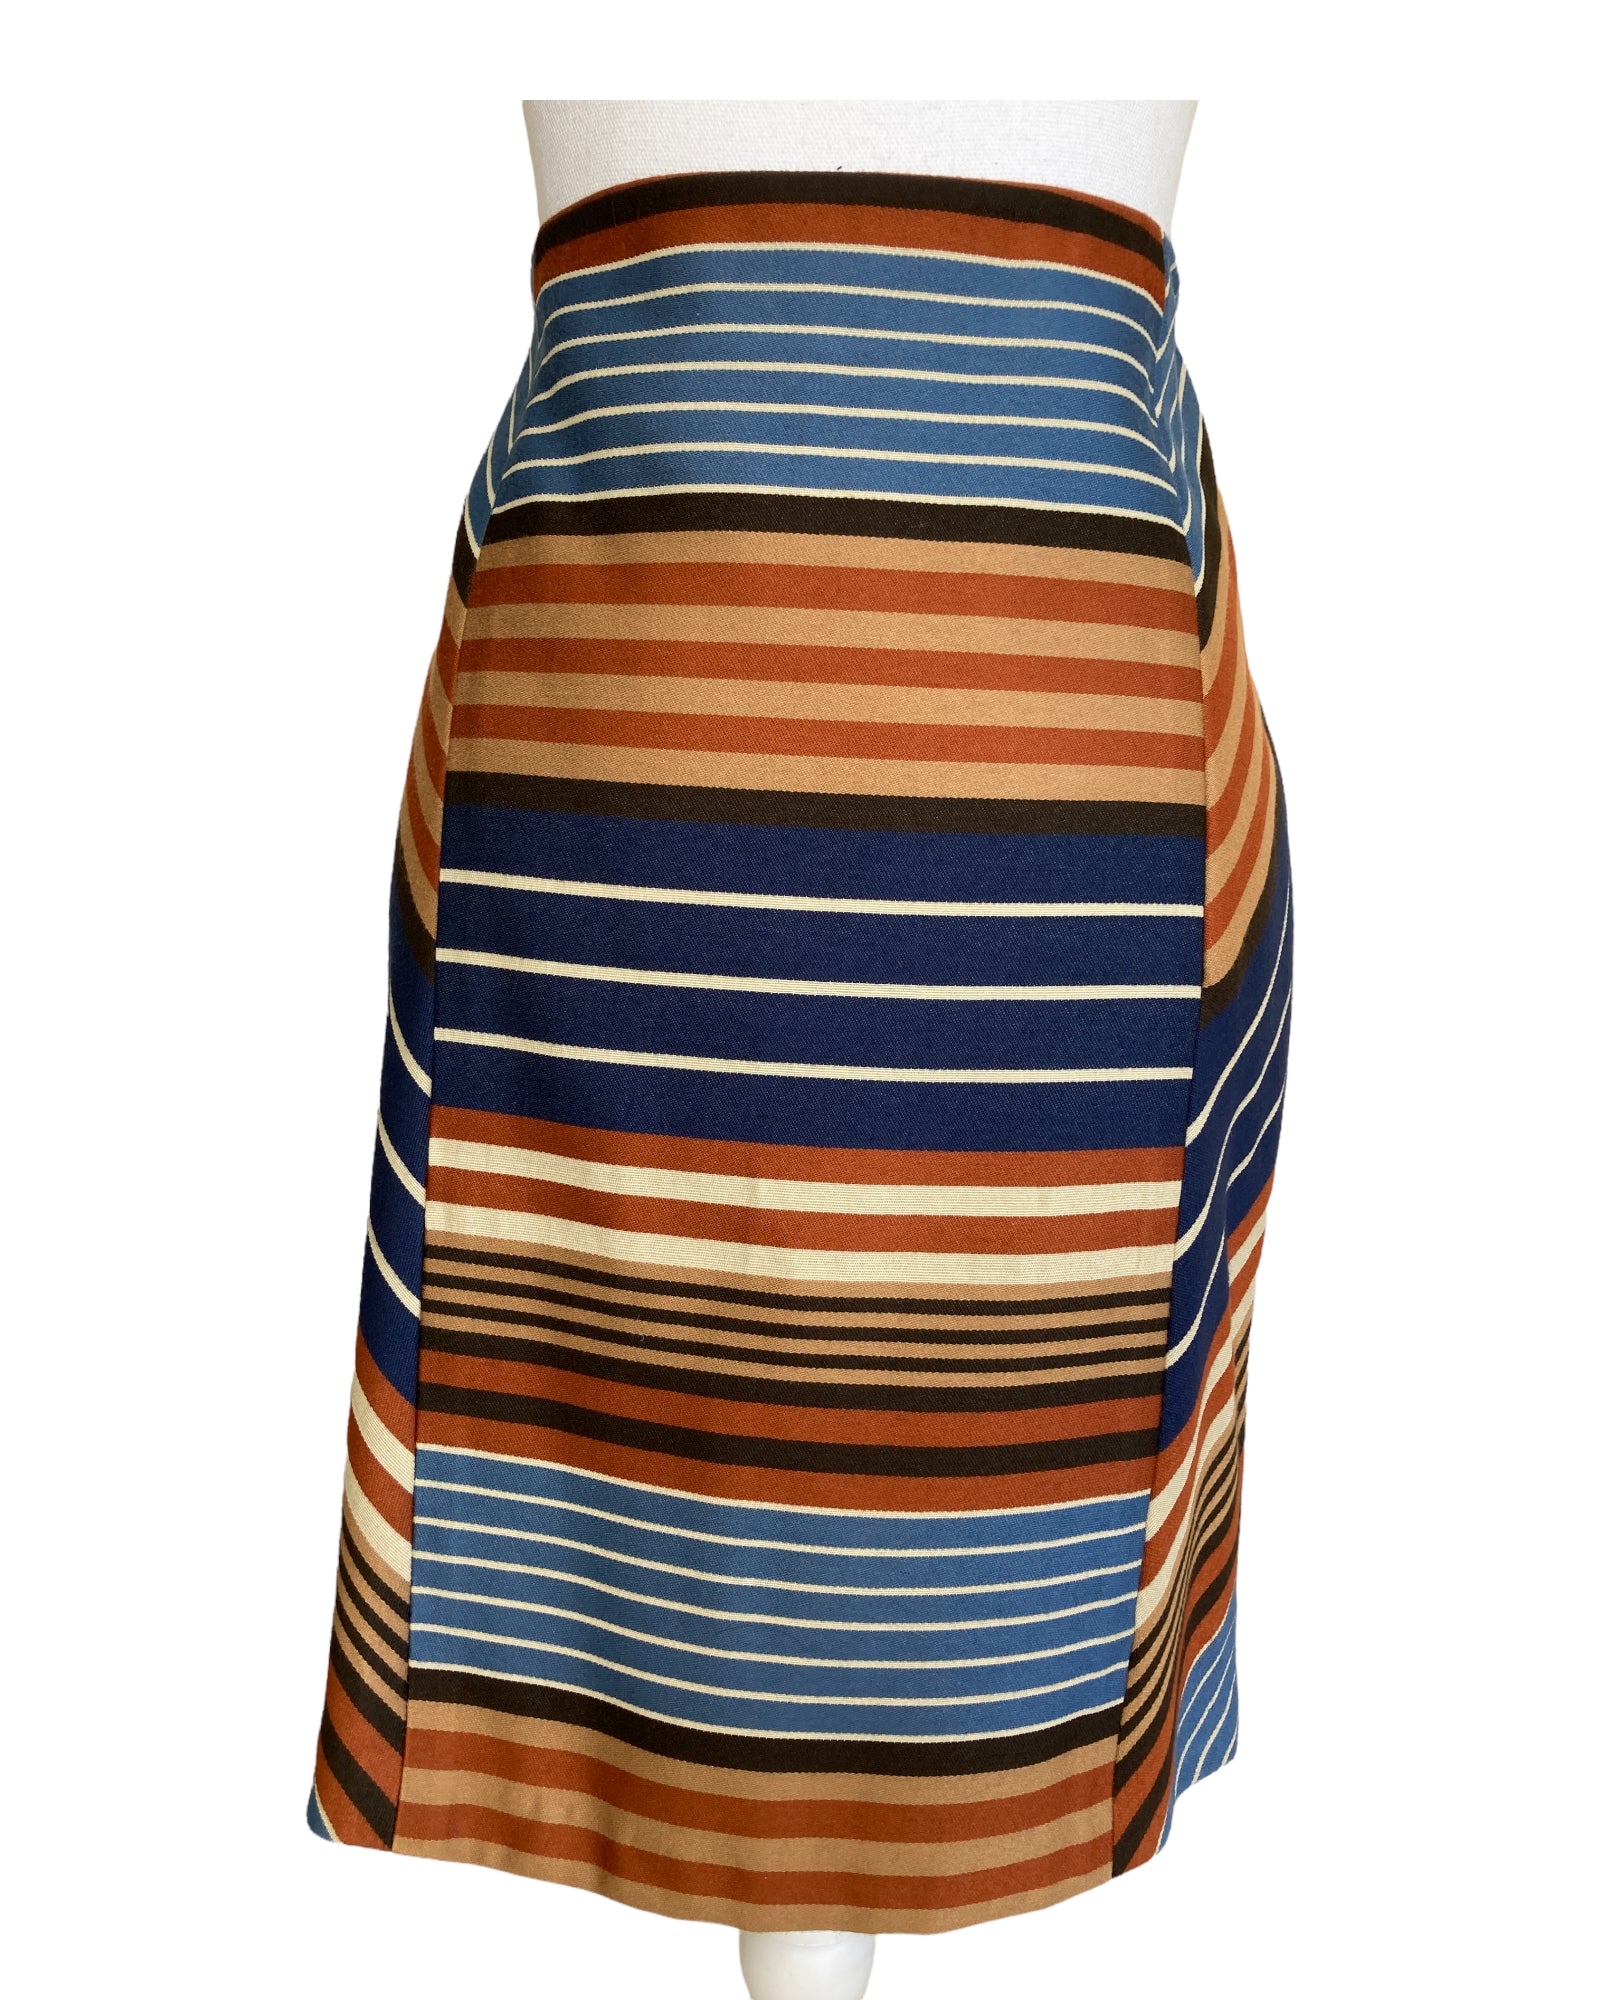 J. McLaughlin Orange and Blue Striped Skirt, 6